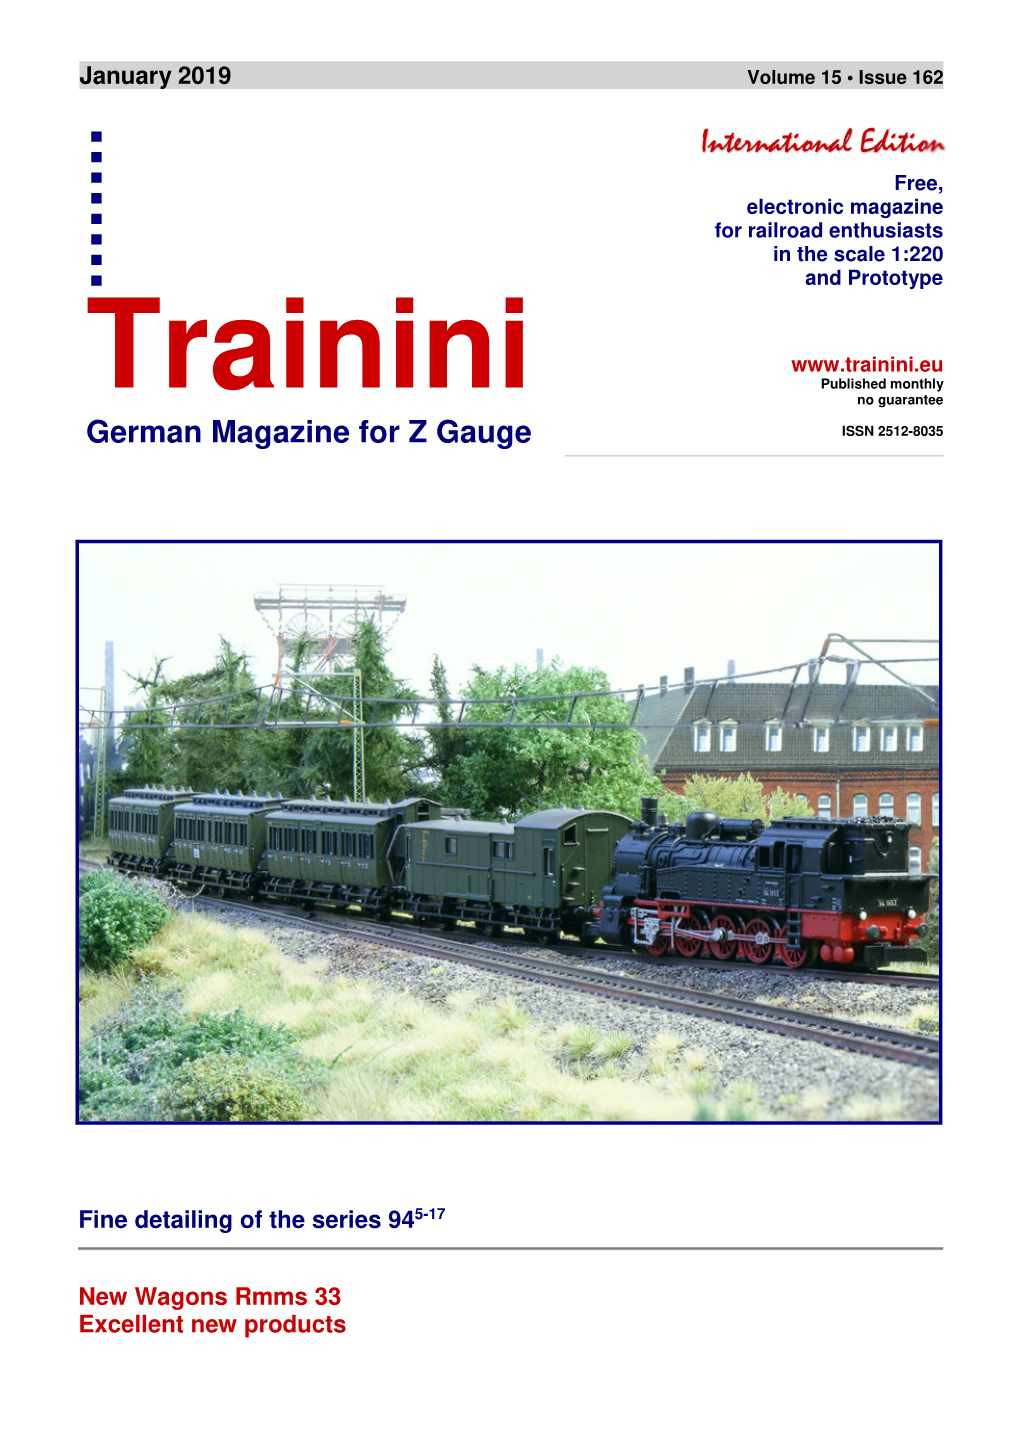 Trainini Magazine: January 2019 | International Edition